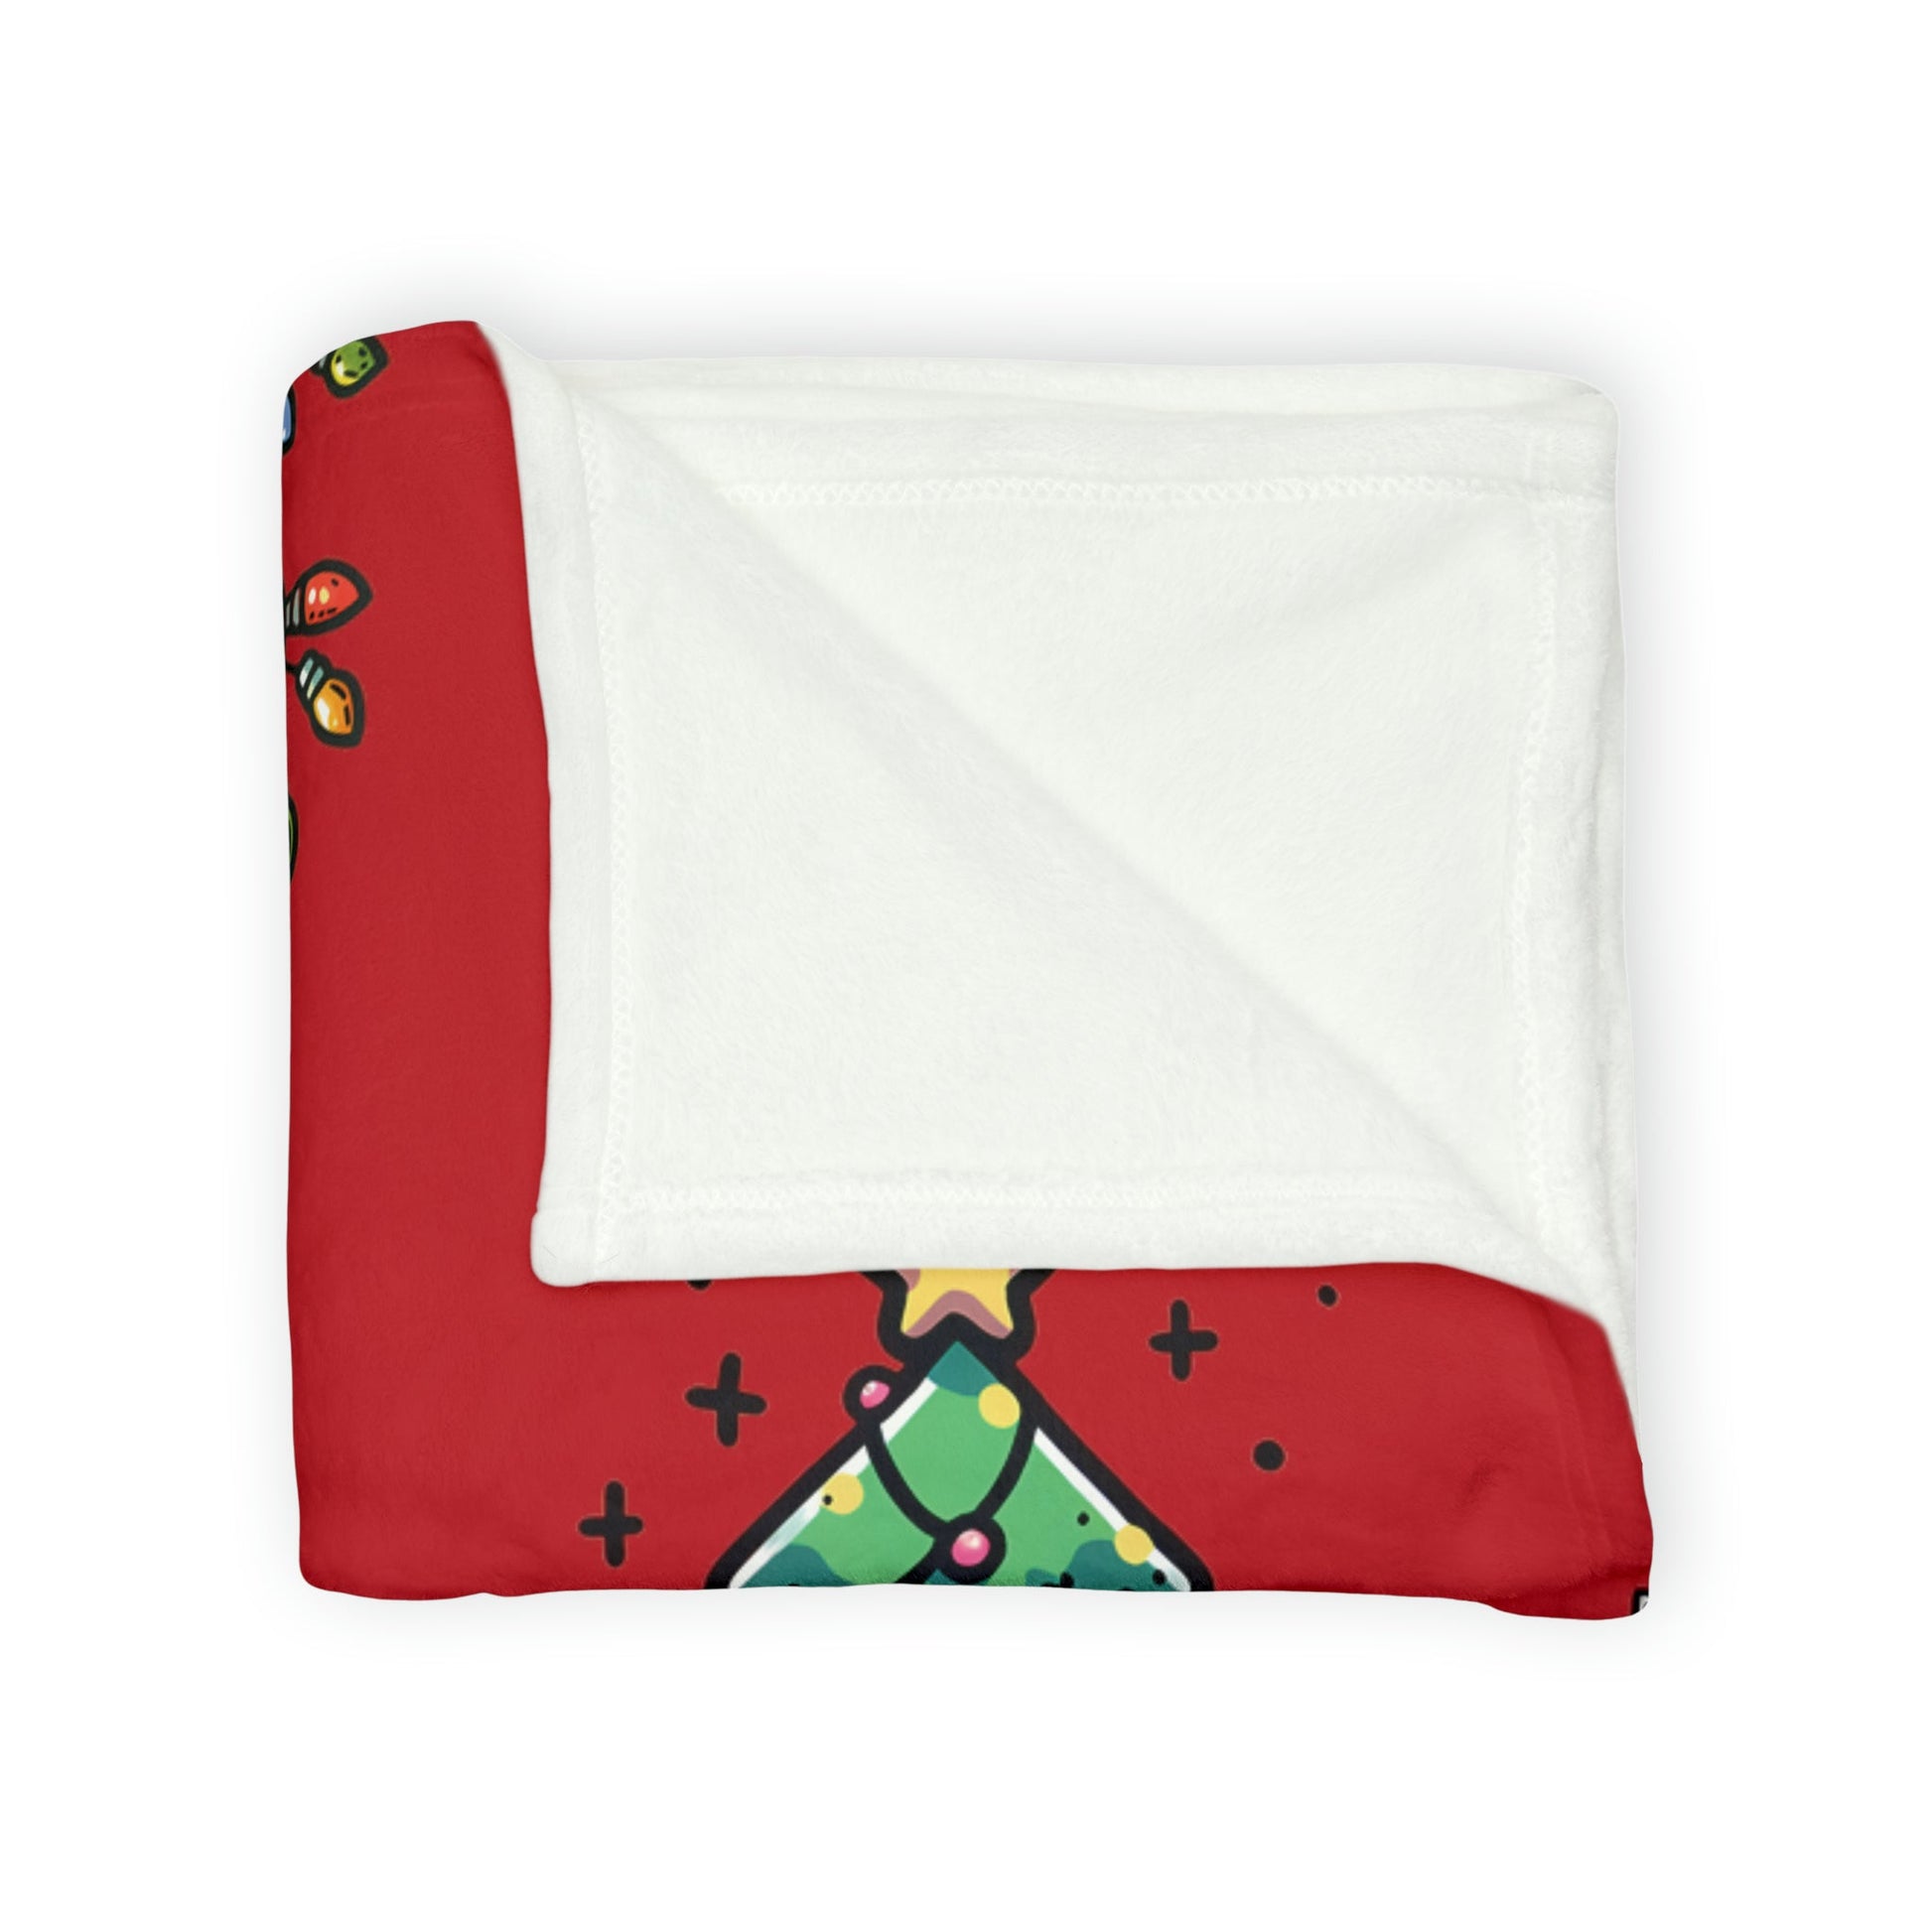 Christmas Cats BlanketHome DecorVTZdesigns50" × 60"BedBeddingBlankets